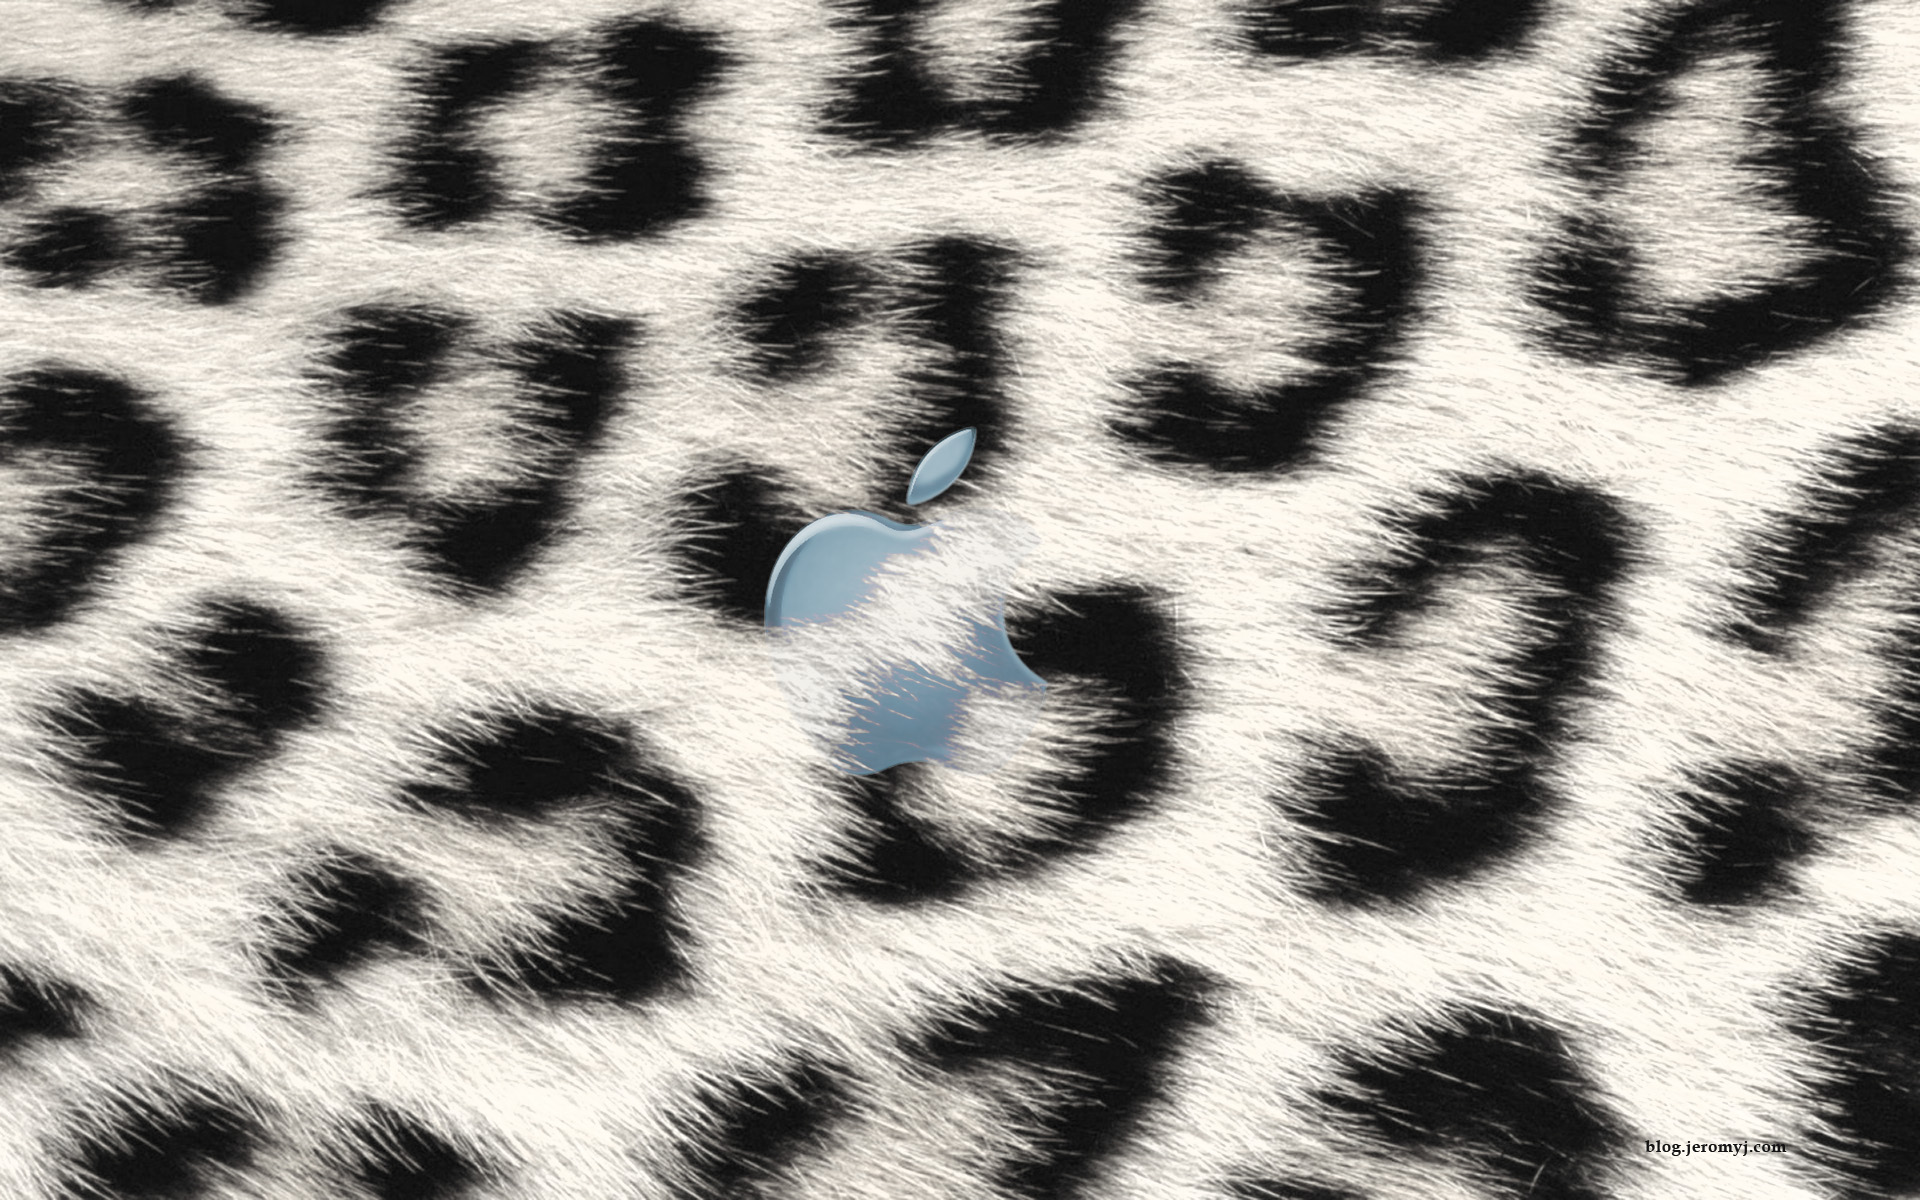 apple snow leopard logo